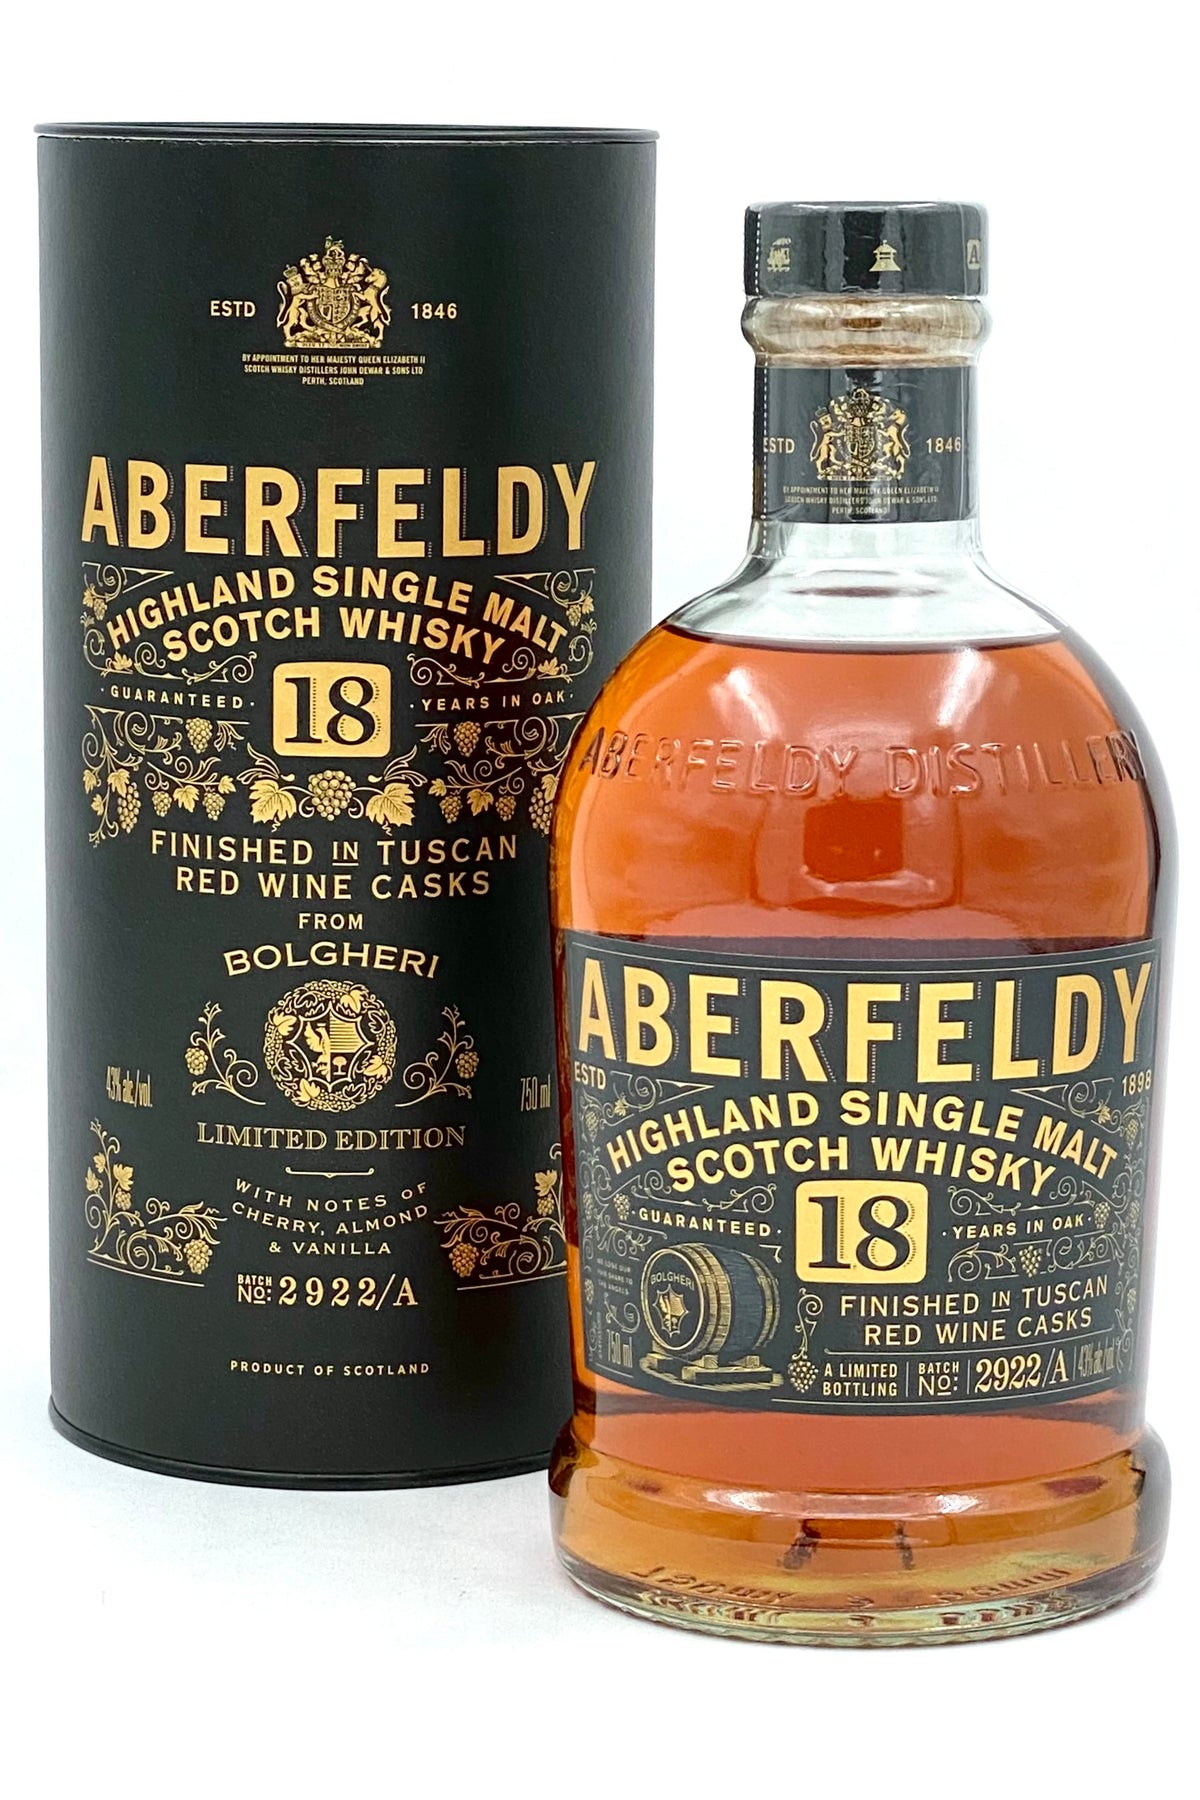 Aberfeldy 18 Year Single Malt Scotch Whisky Limited Edition